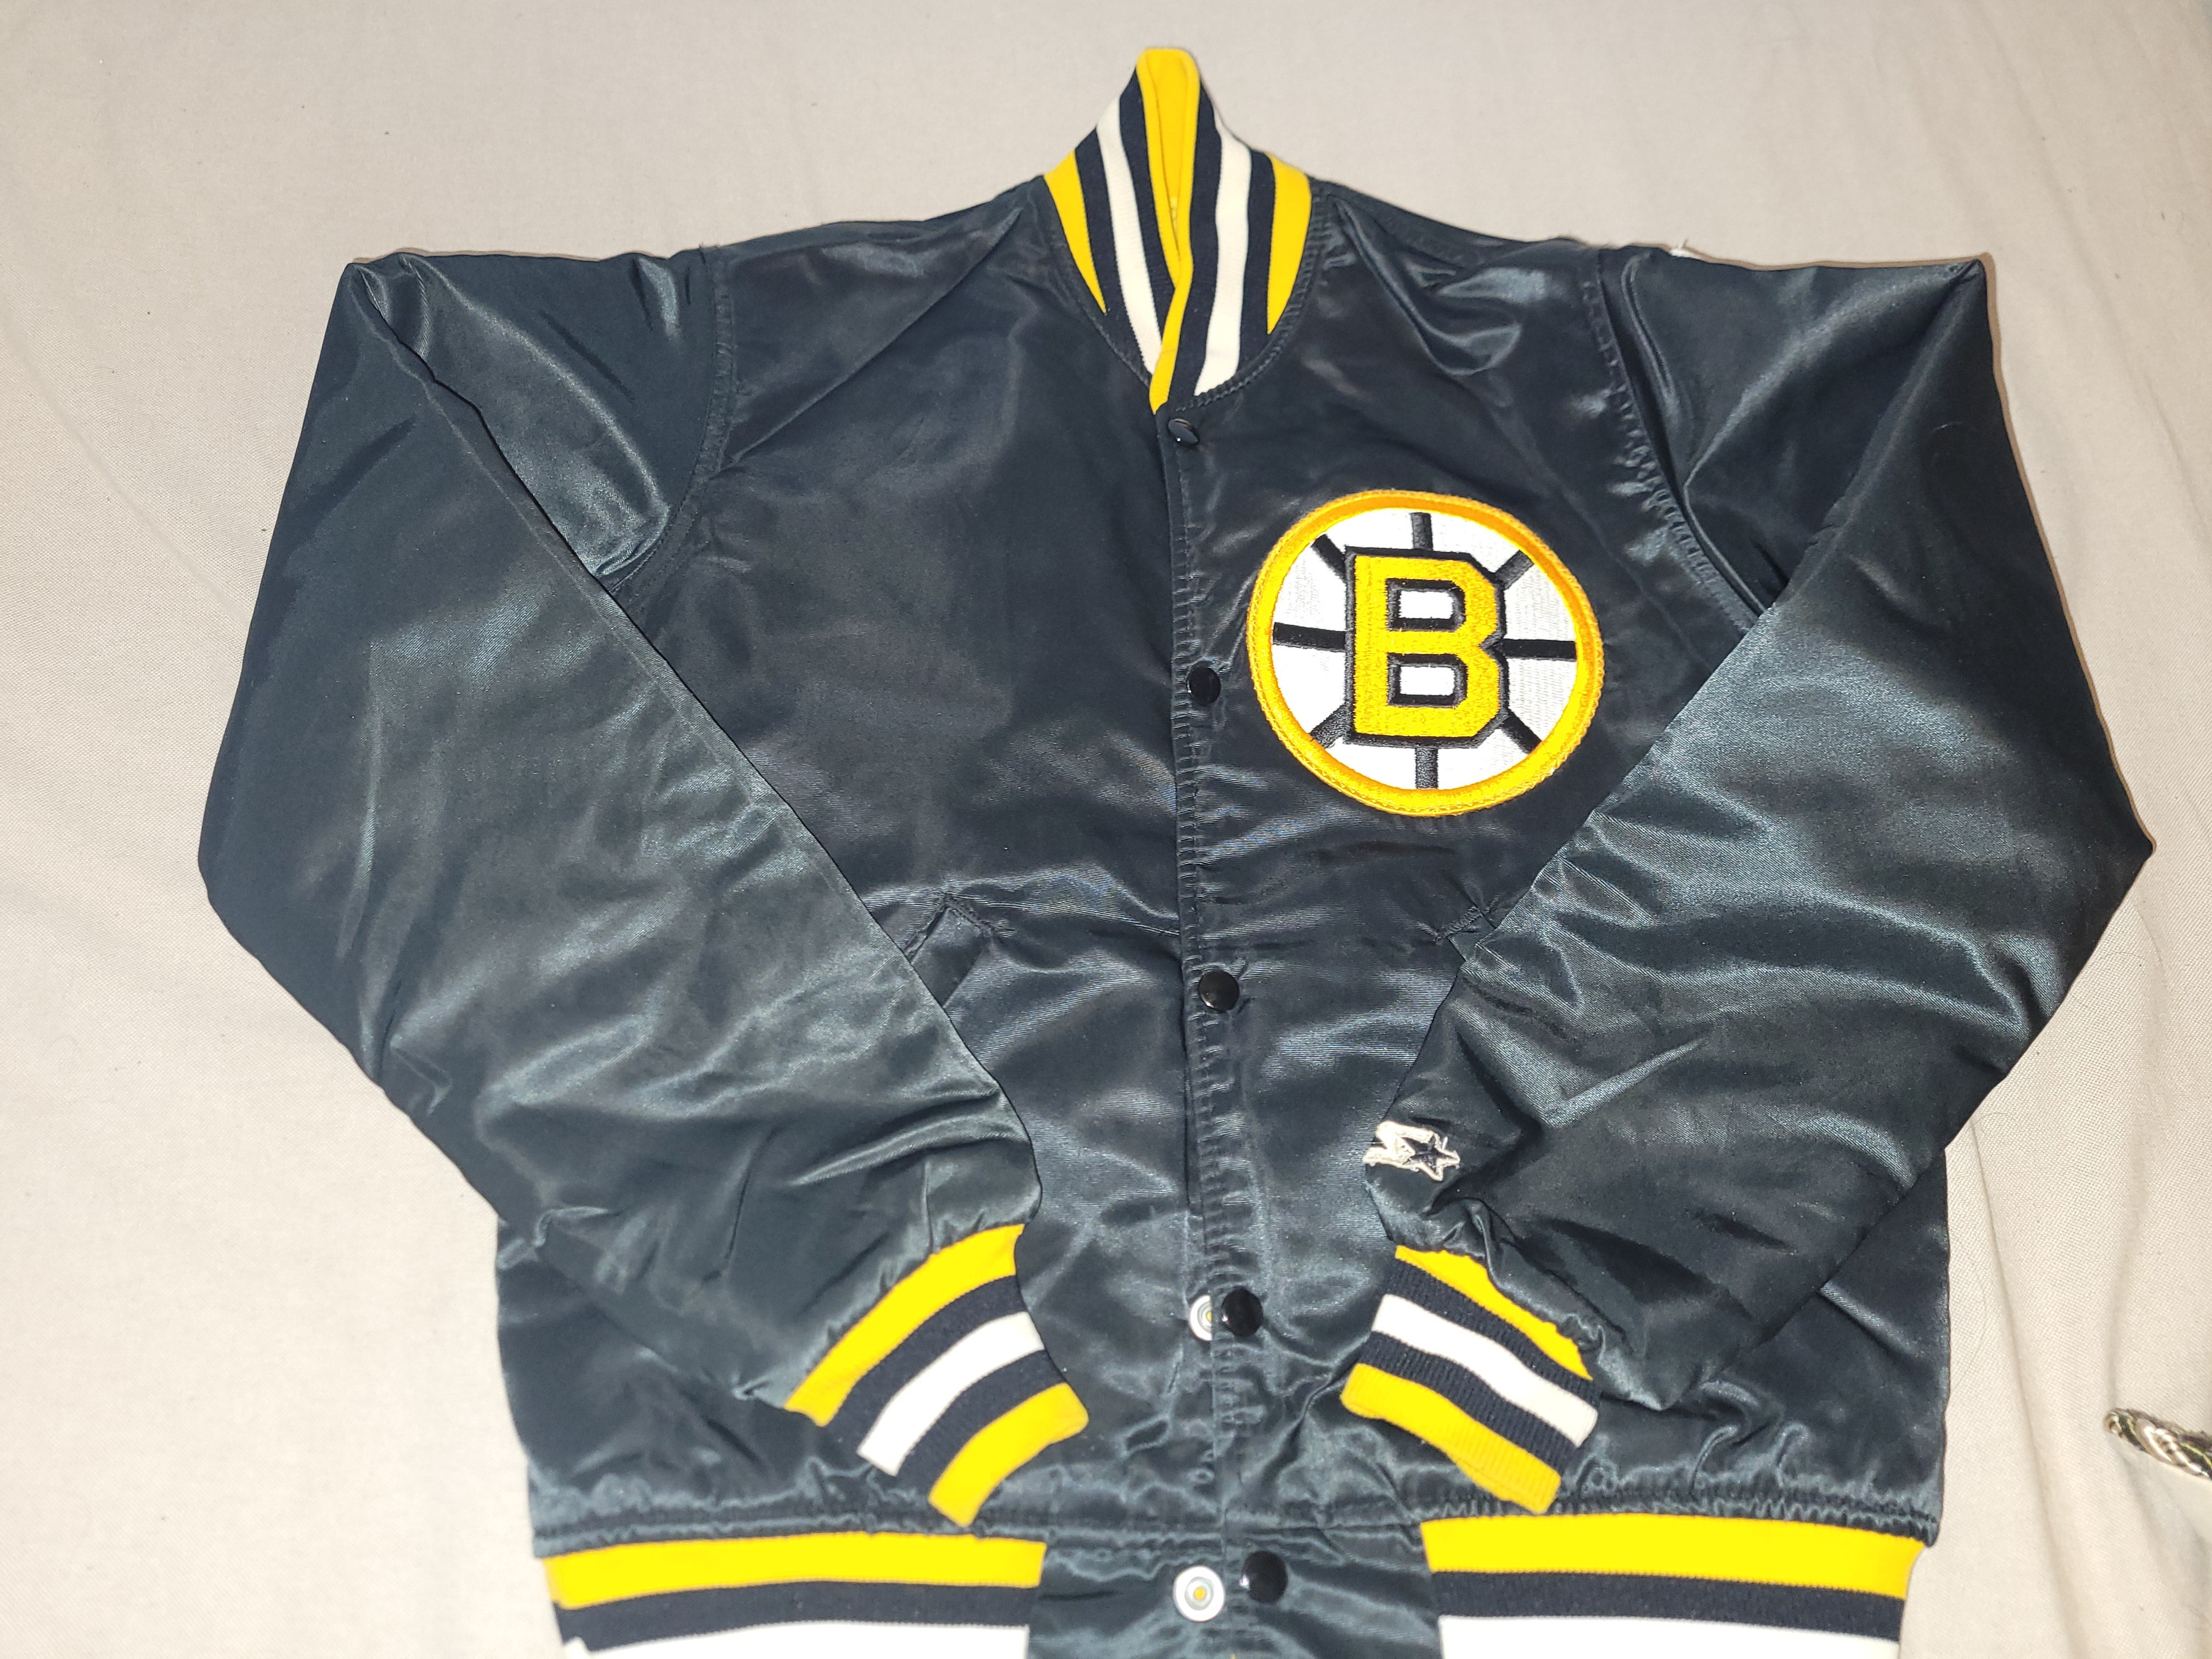 Bruins Starter Vintage Hit and Run Half-Zip Pullover Jacket (M) | Boston ProShop